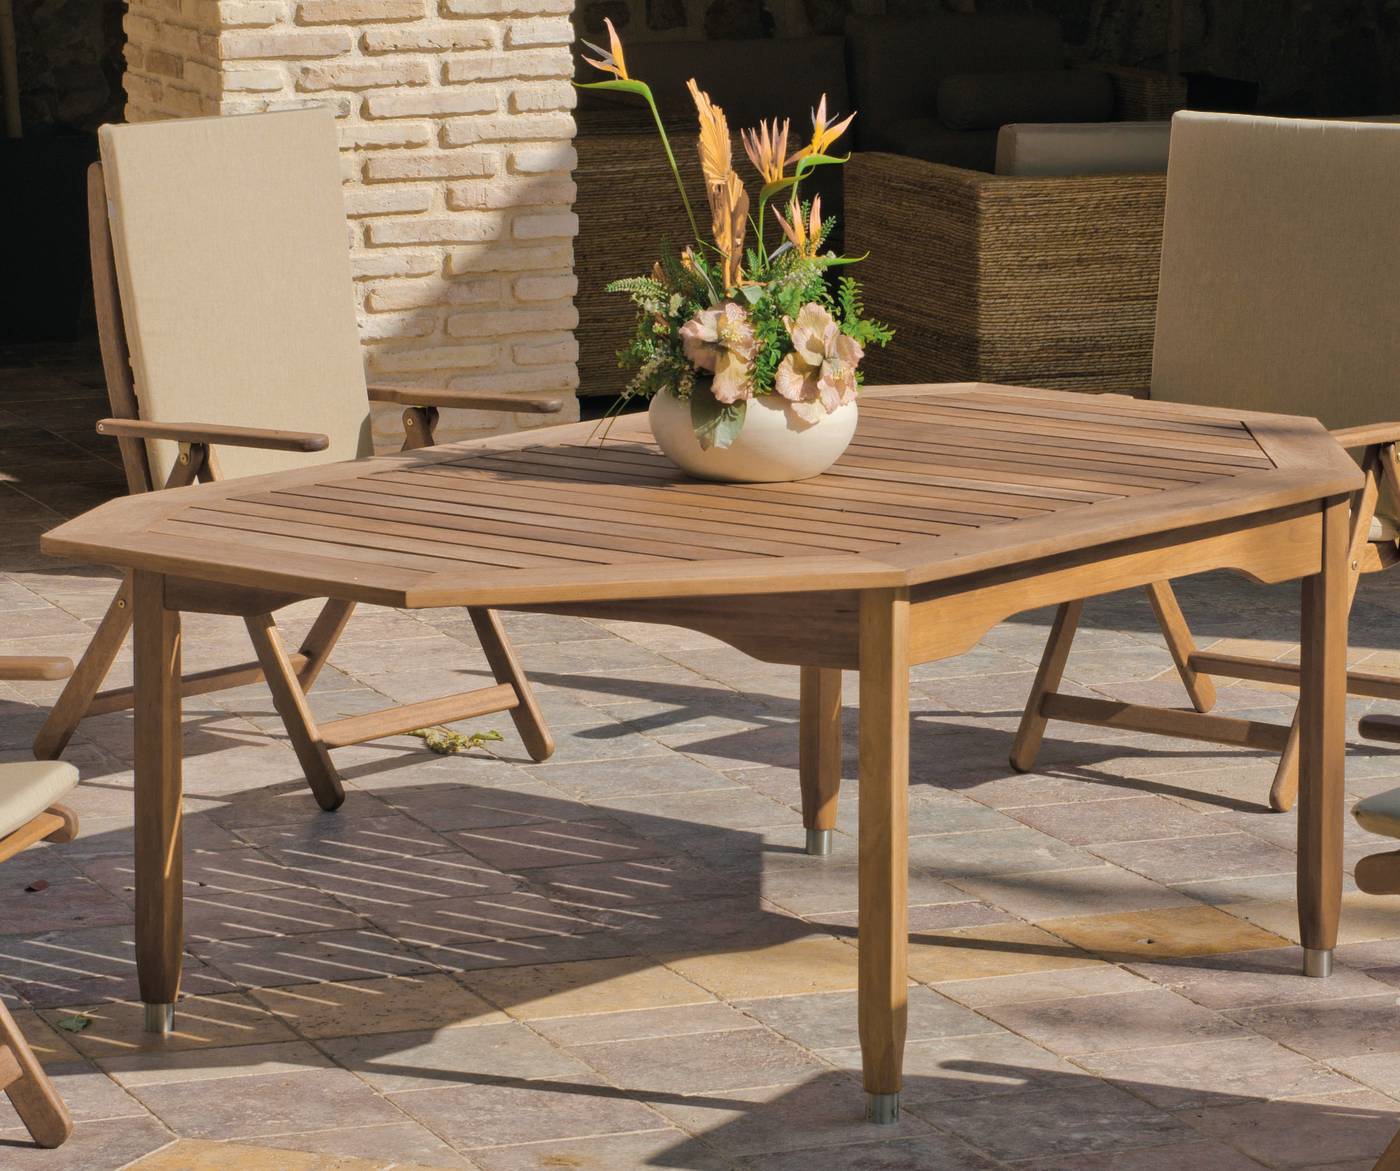 Set Madera Valera-200 - Conjunto de madera hardwood: mesa + 4 tumbonas + 4 cojines en dralón